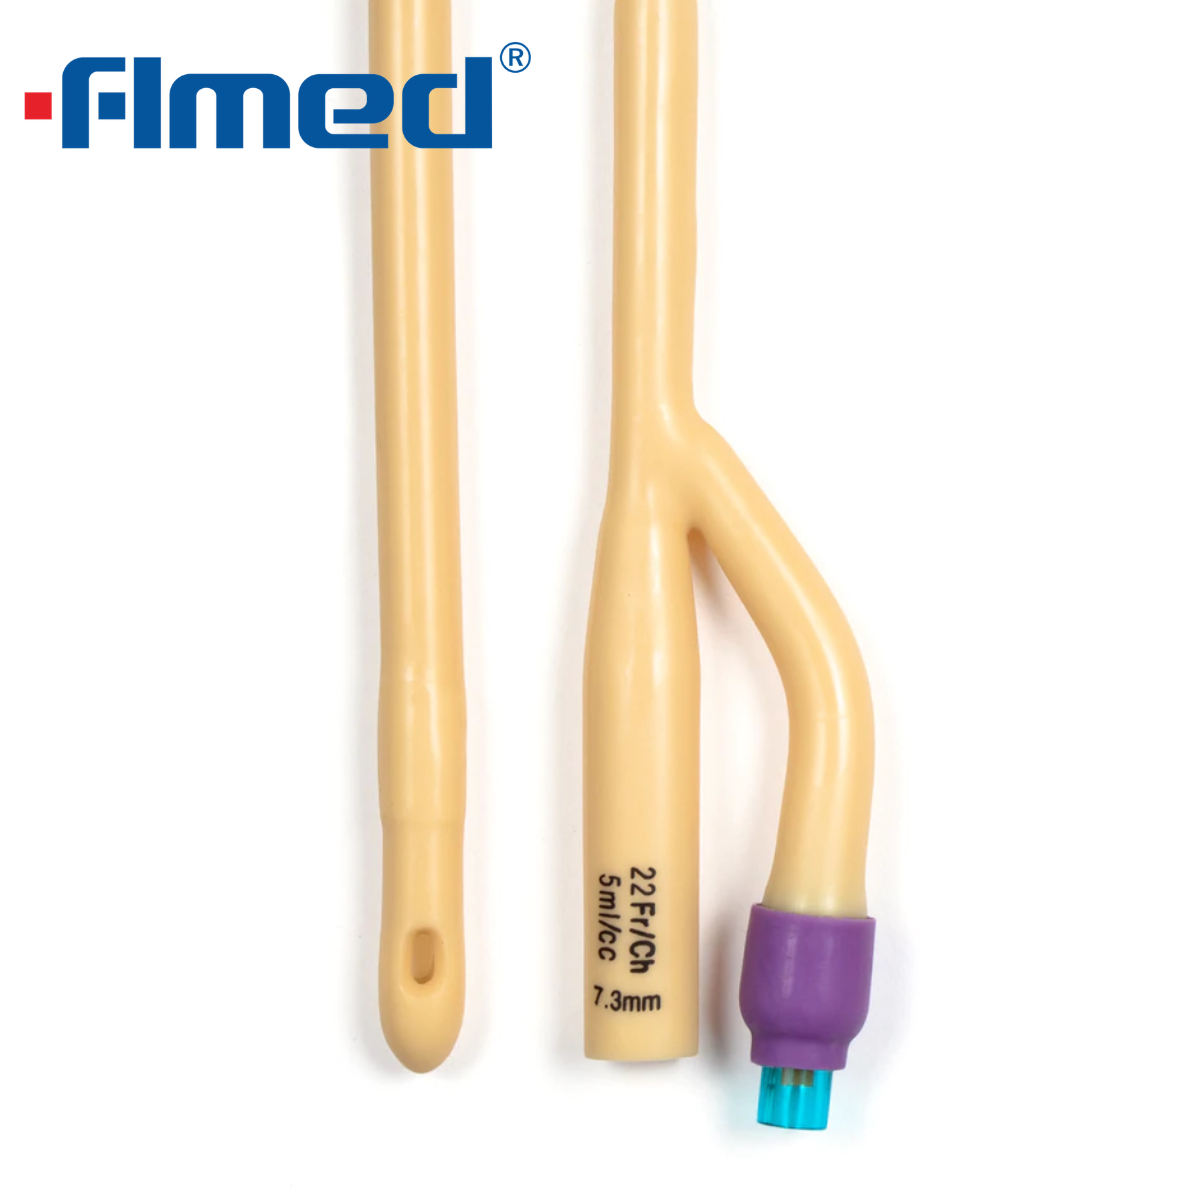 2-Way Silicone Coated Latex Foley Catheter With 5cc Balloon Capacity